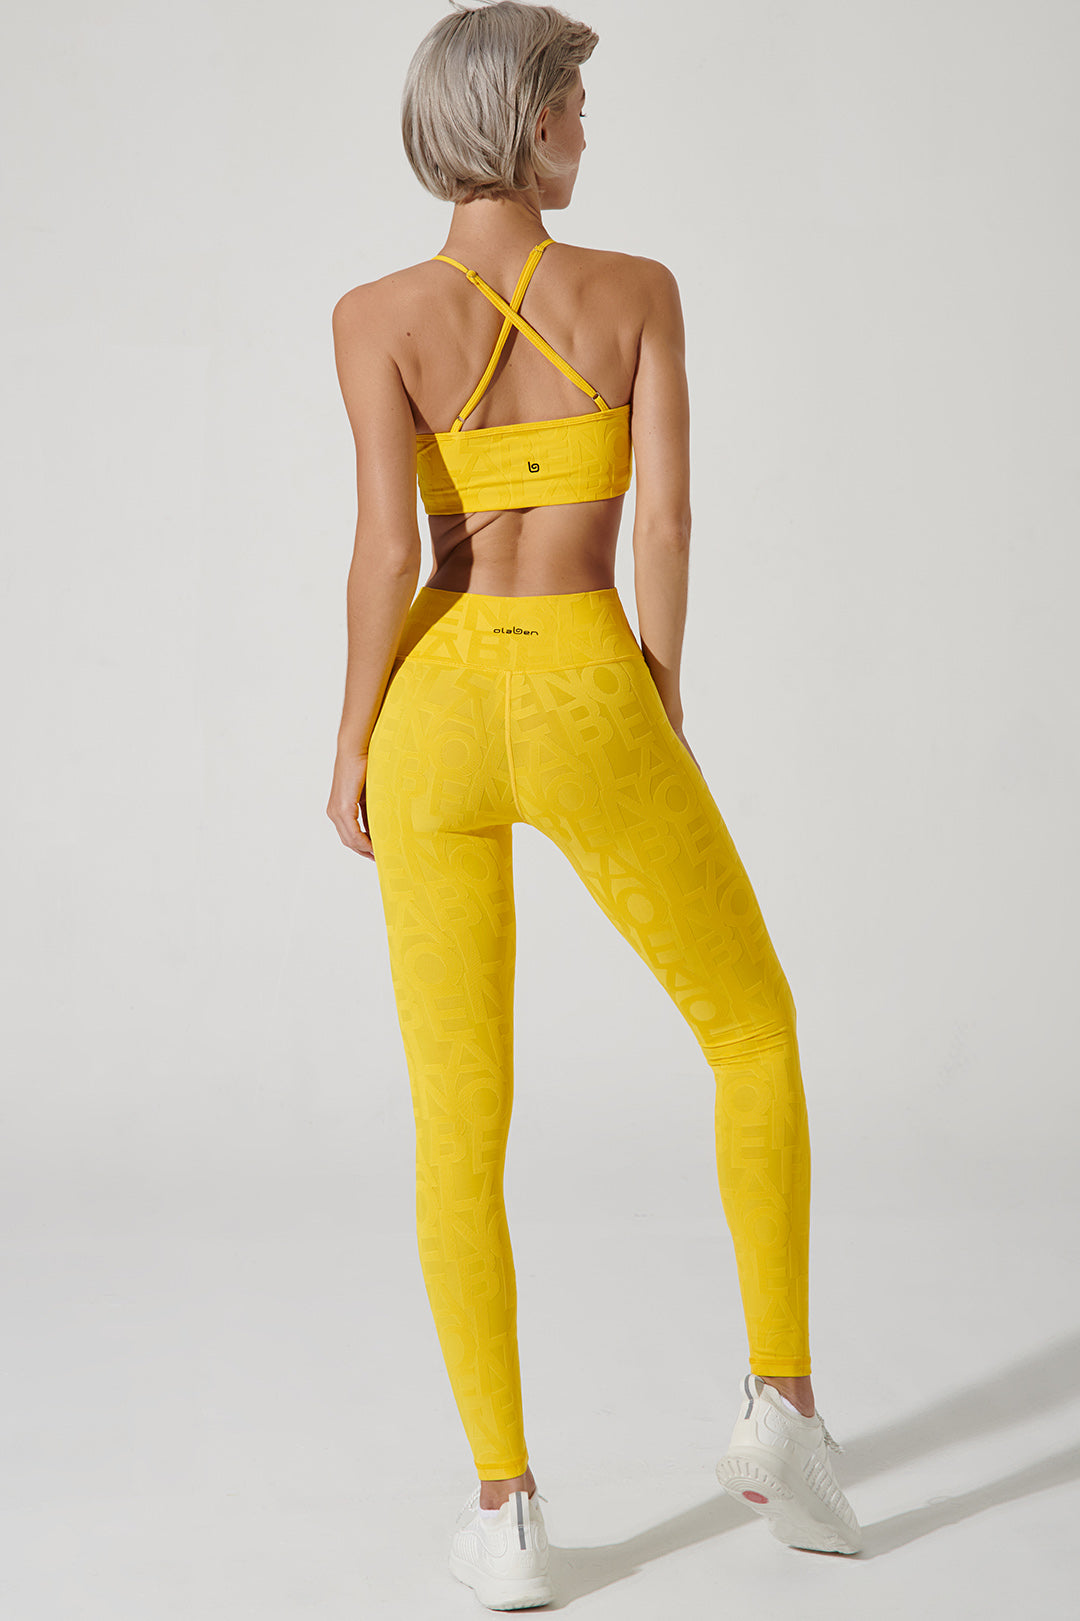 Vibrant gamboge yellow 3D leggings for women - Deese Fleur Legging - OW-0073-WLG-YL.